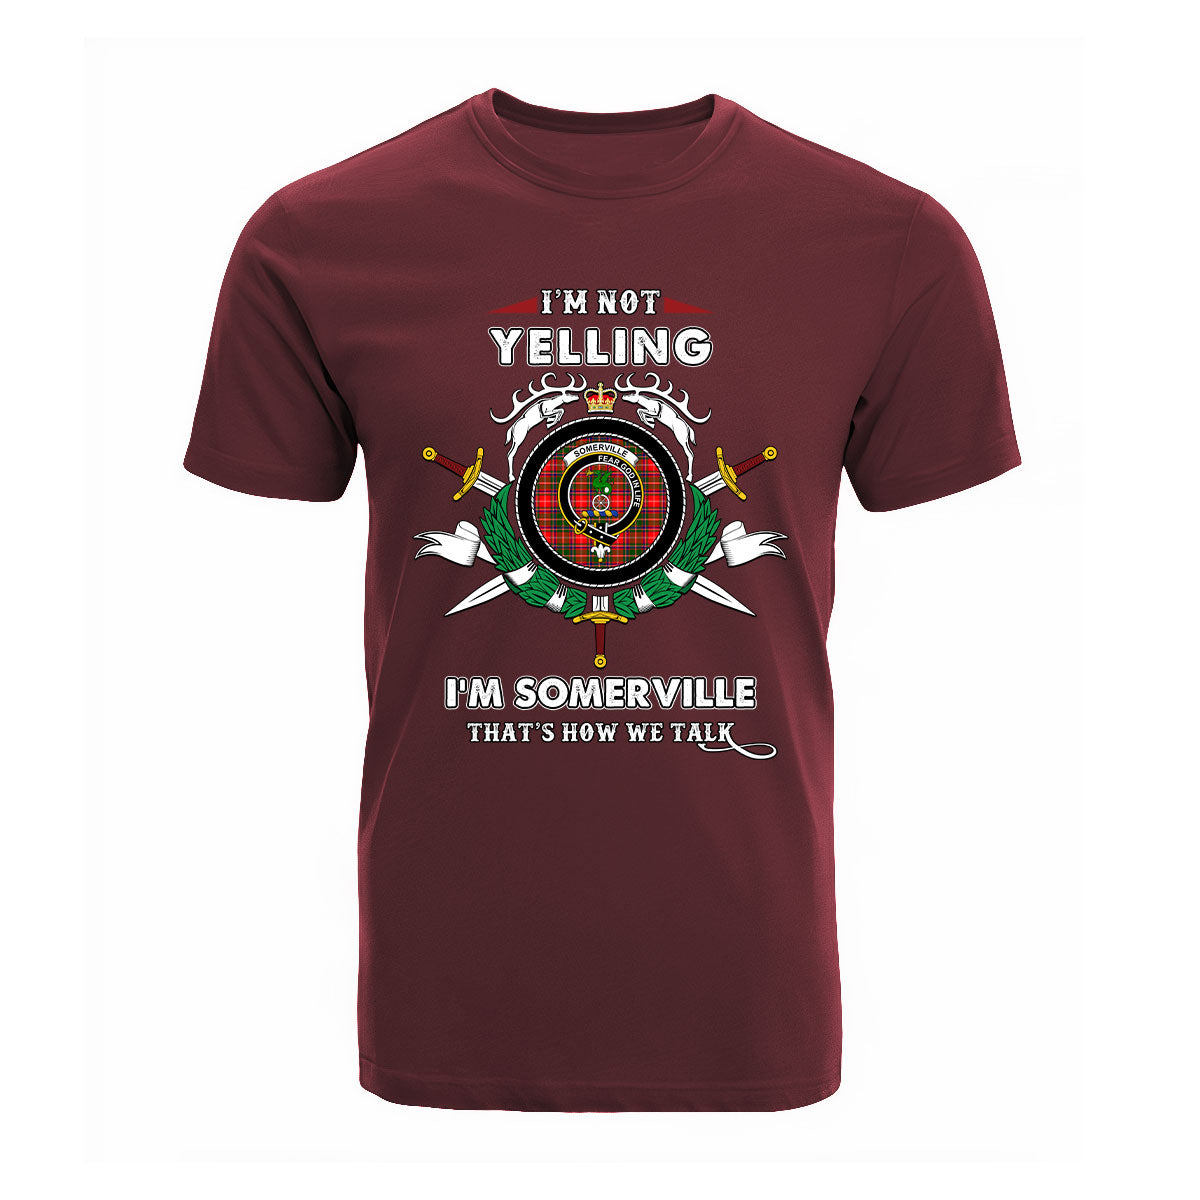 Somerville Tartan Crest T-shirt - I'm not yelling style